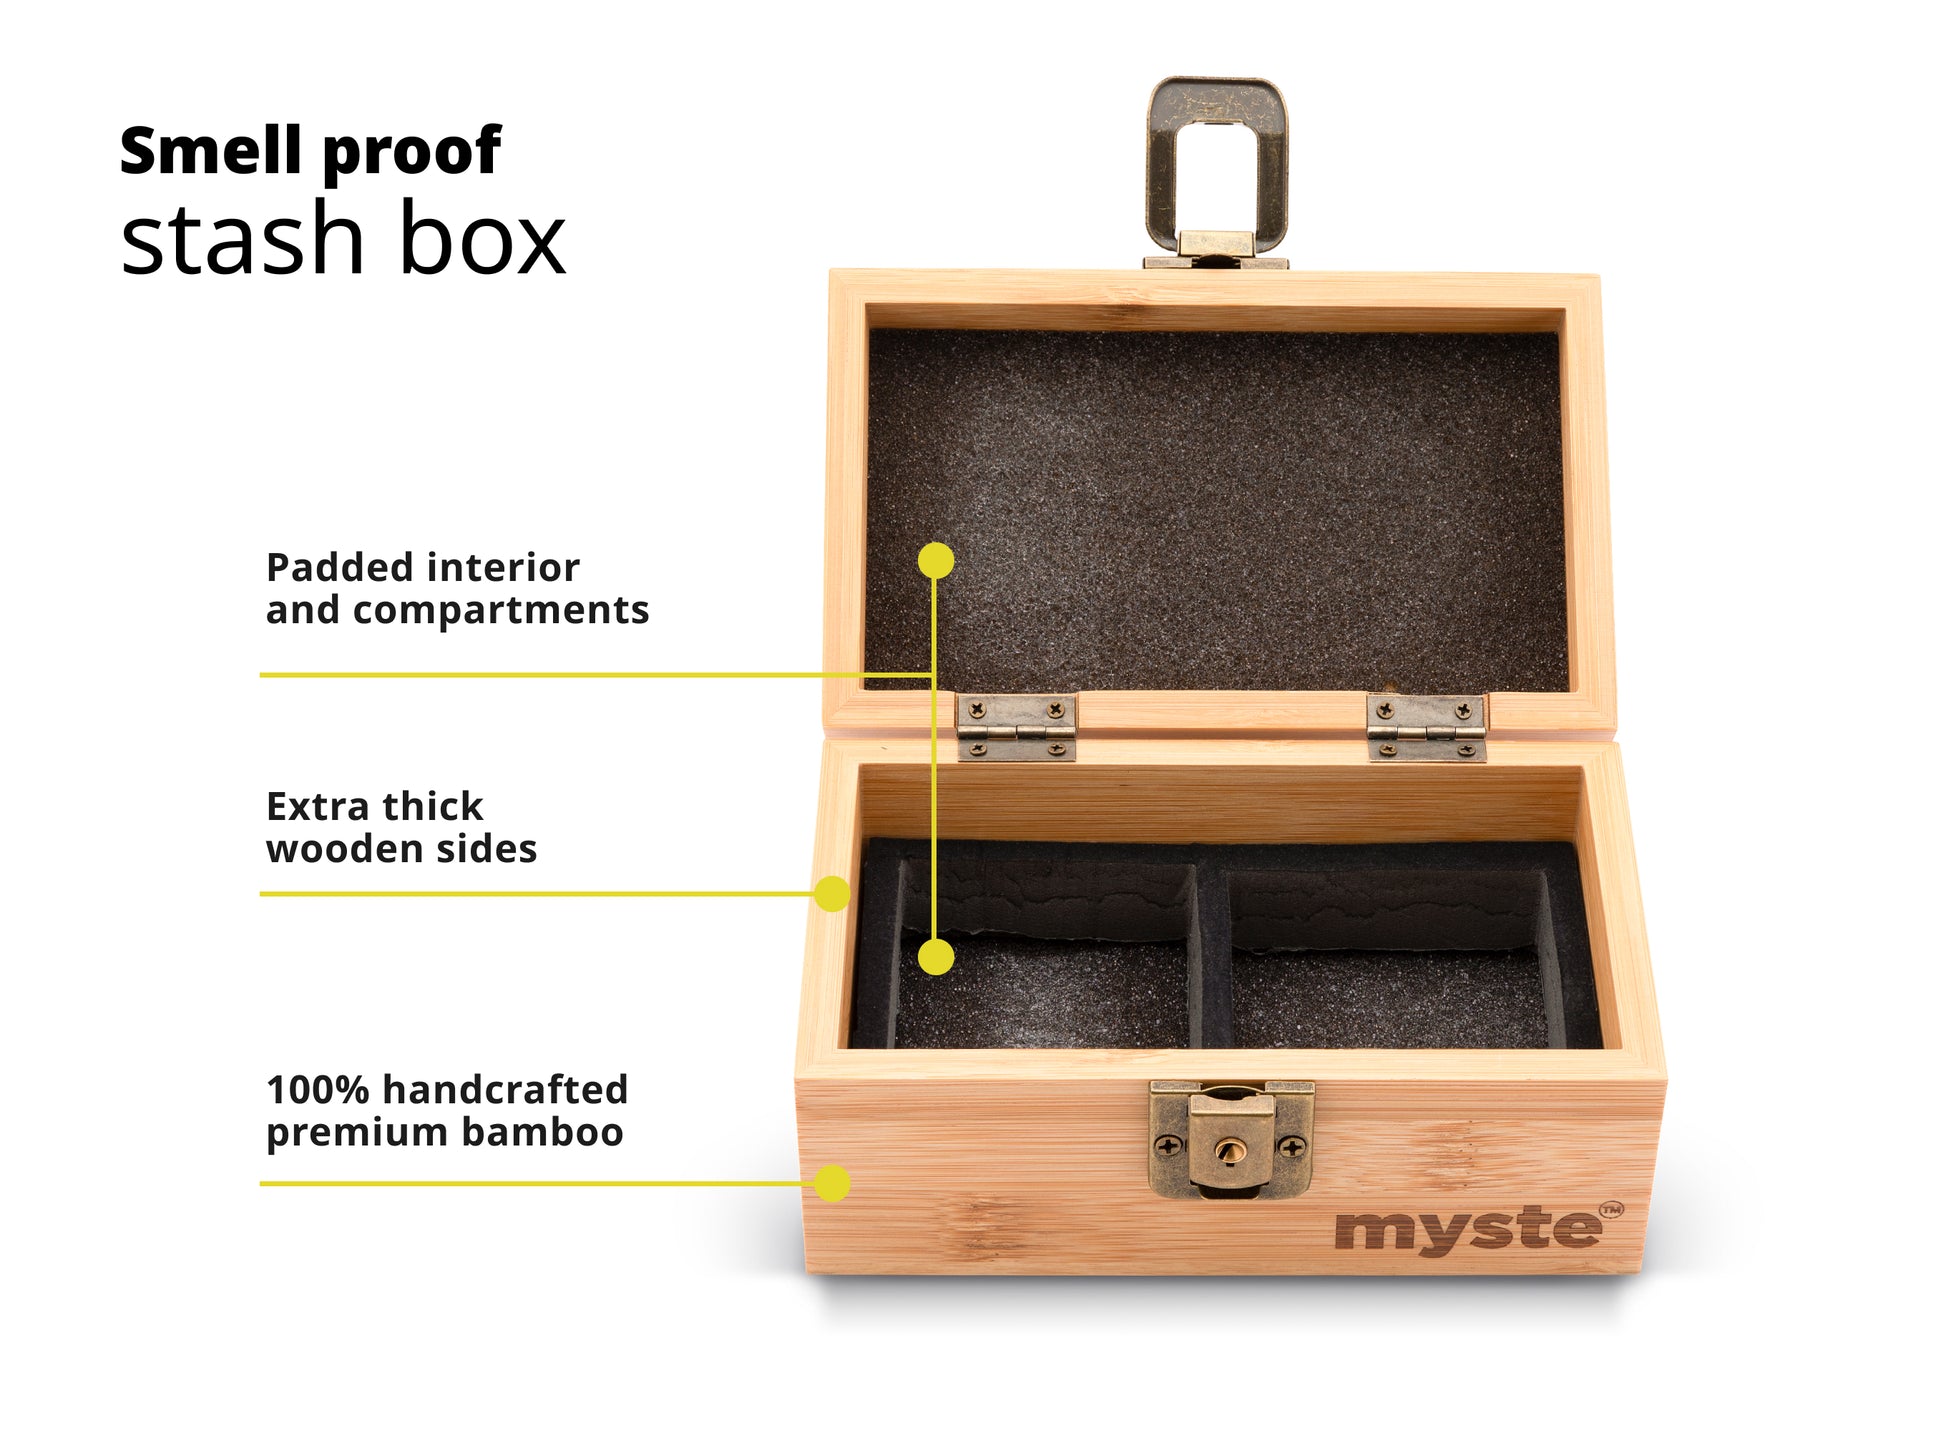 The Stash Box™